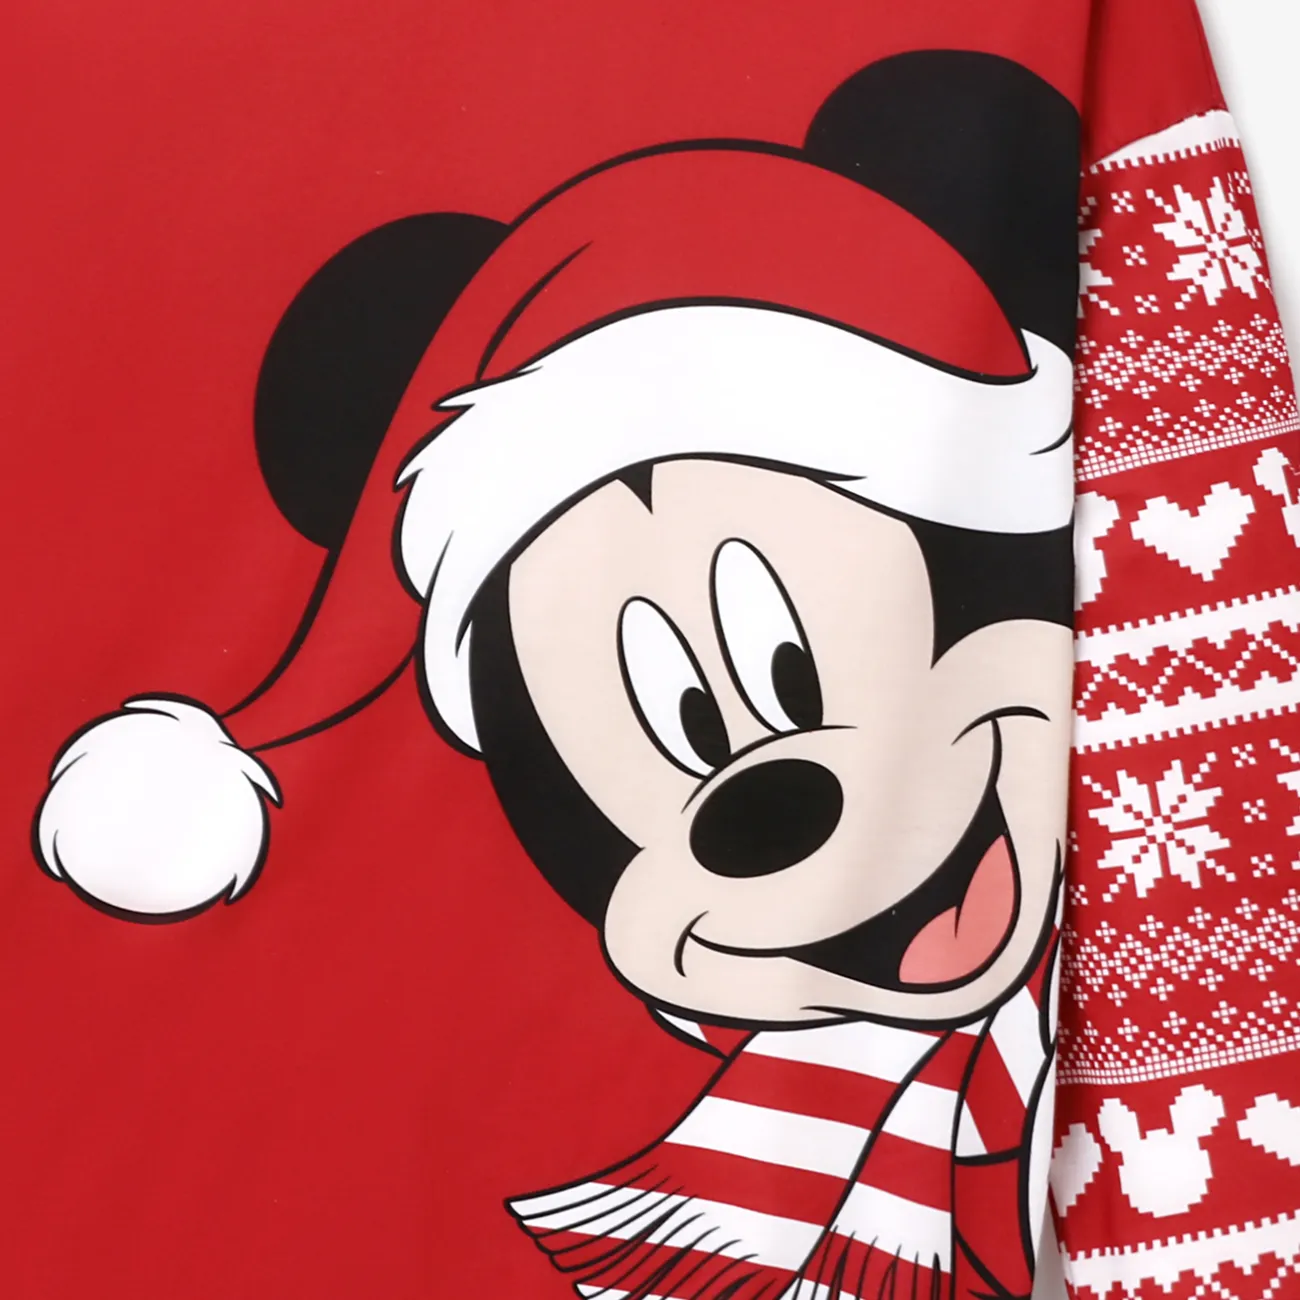 Disney Mickey and Friends Looks familiares Navidad Manga larga Conjuntos combinados para familia Tops Rojo big image 1